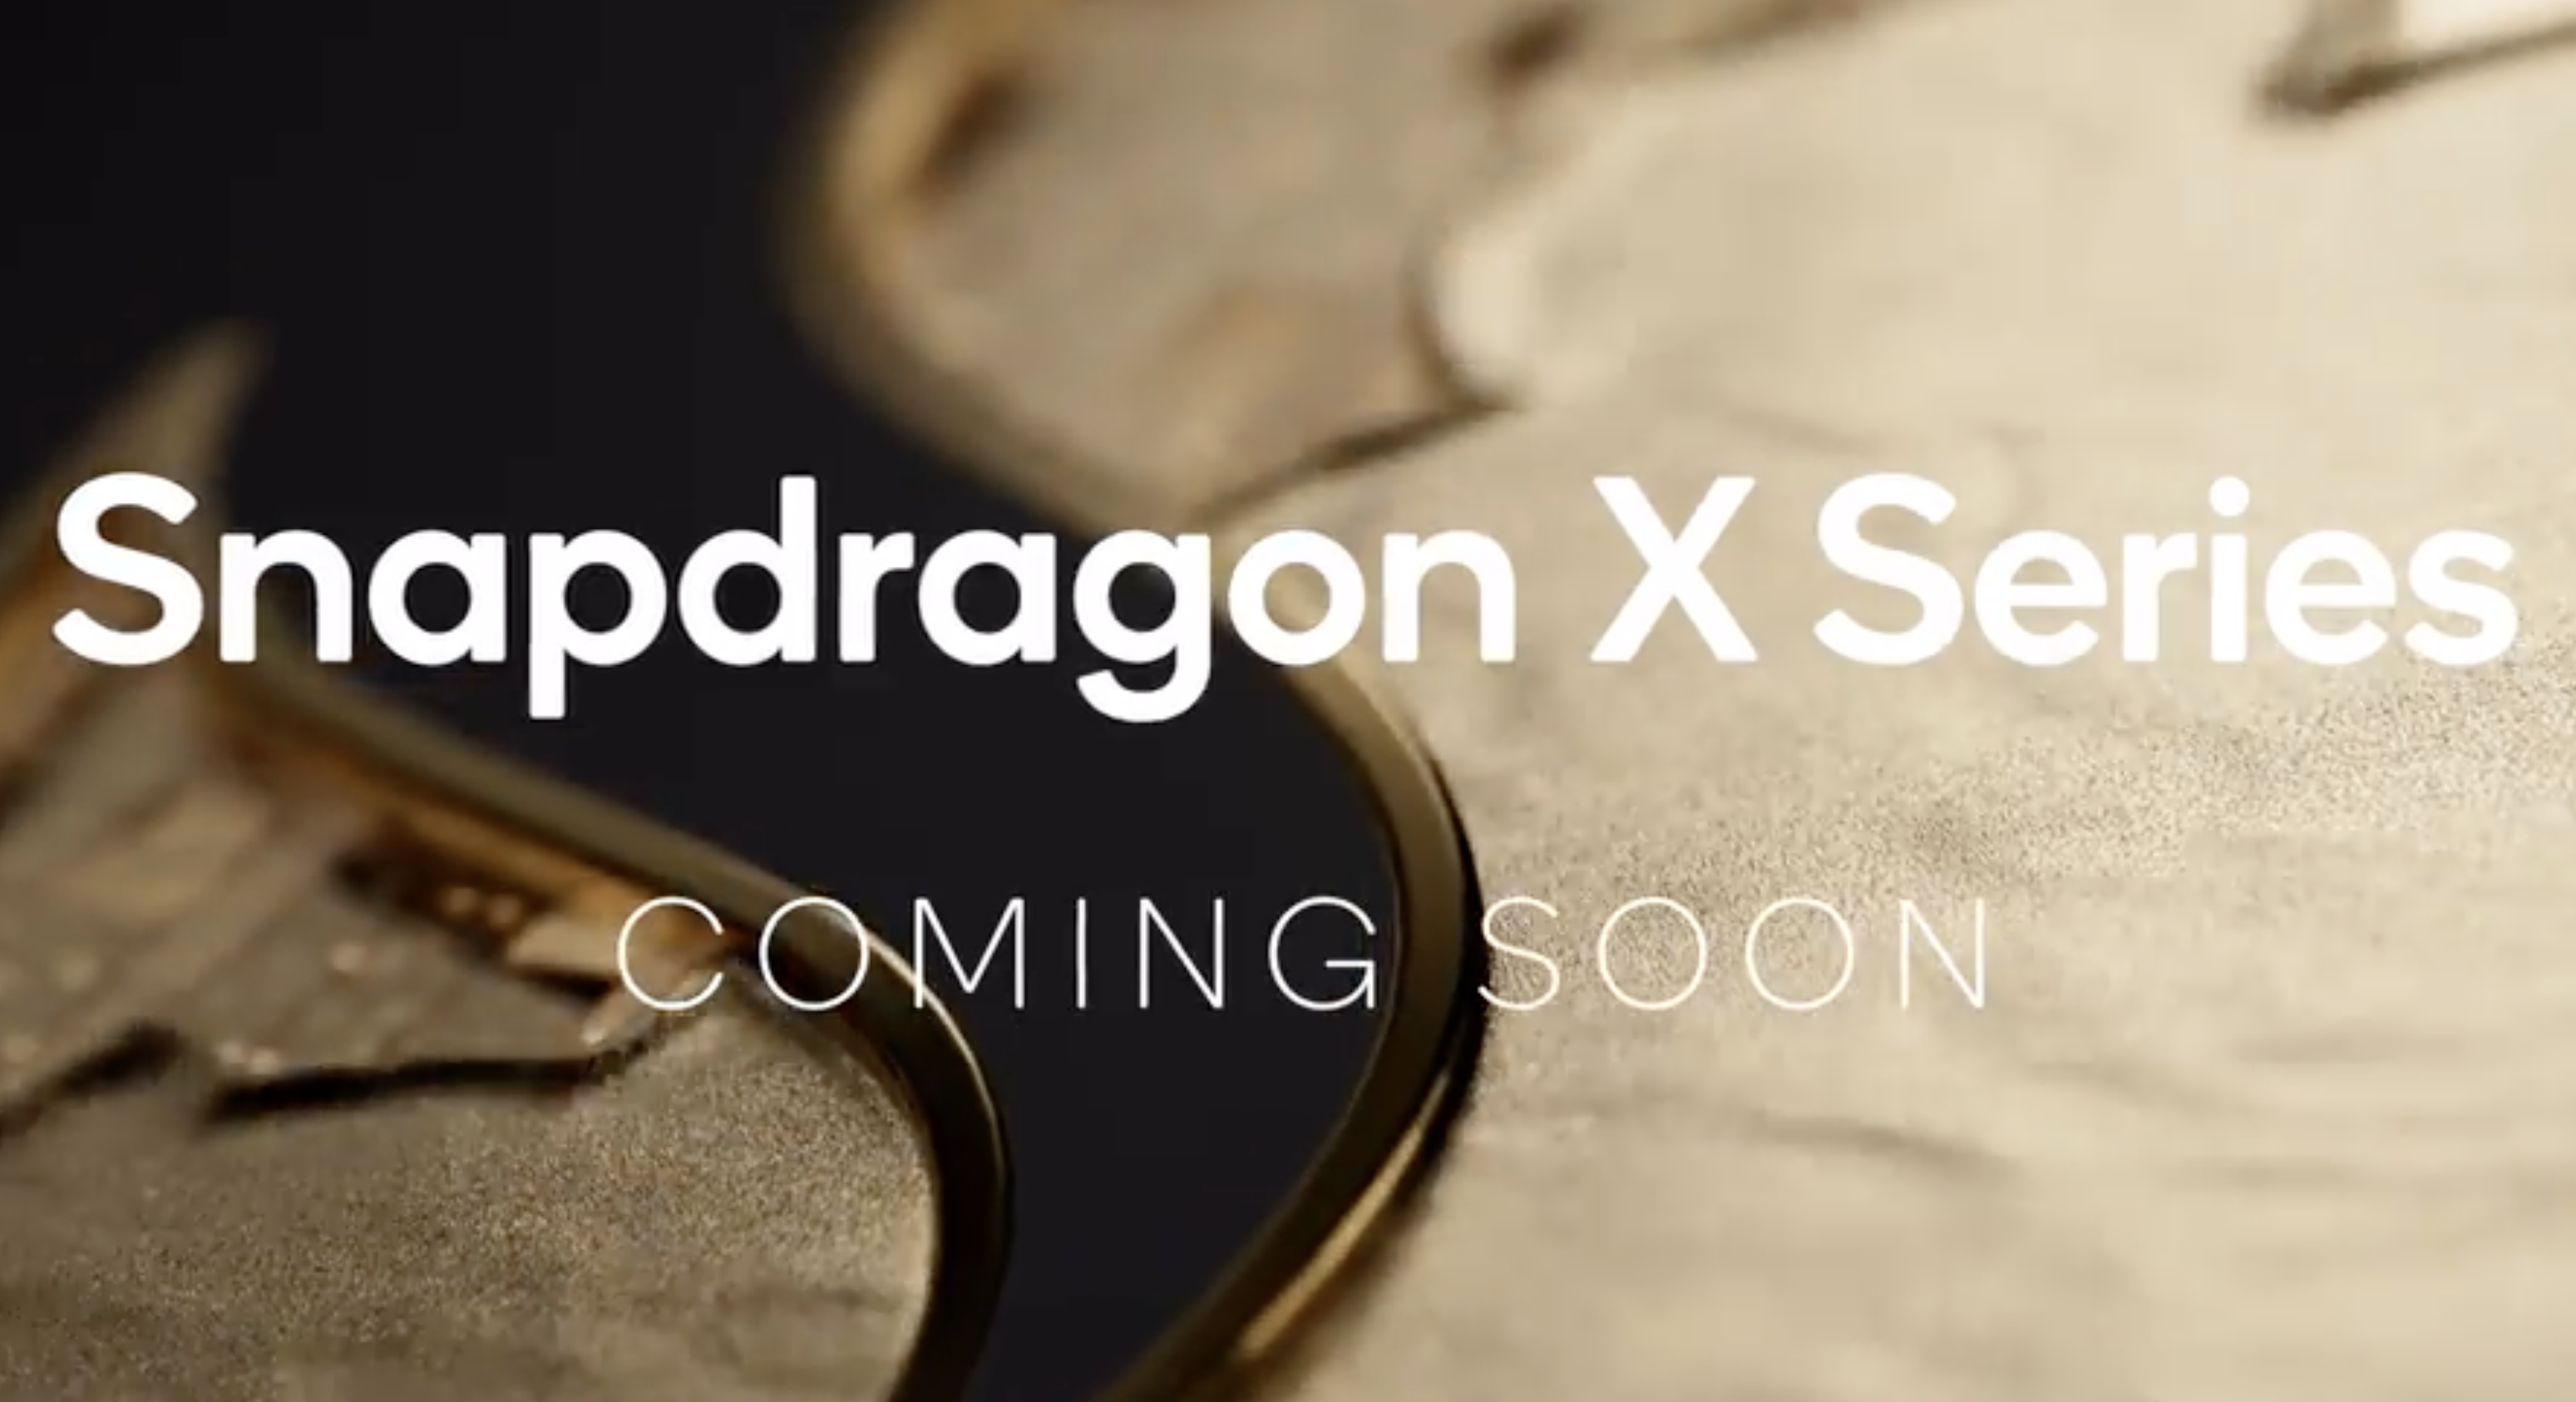 Snapdragon X Series teaser image